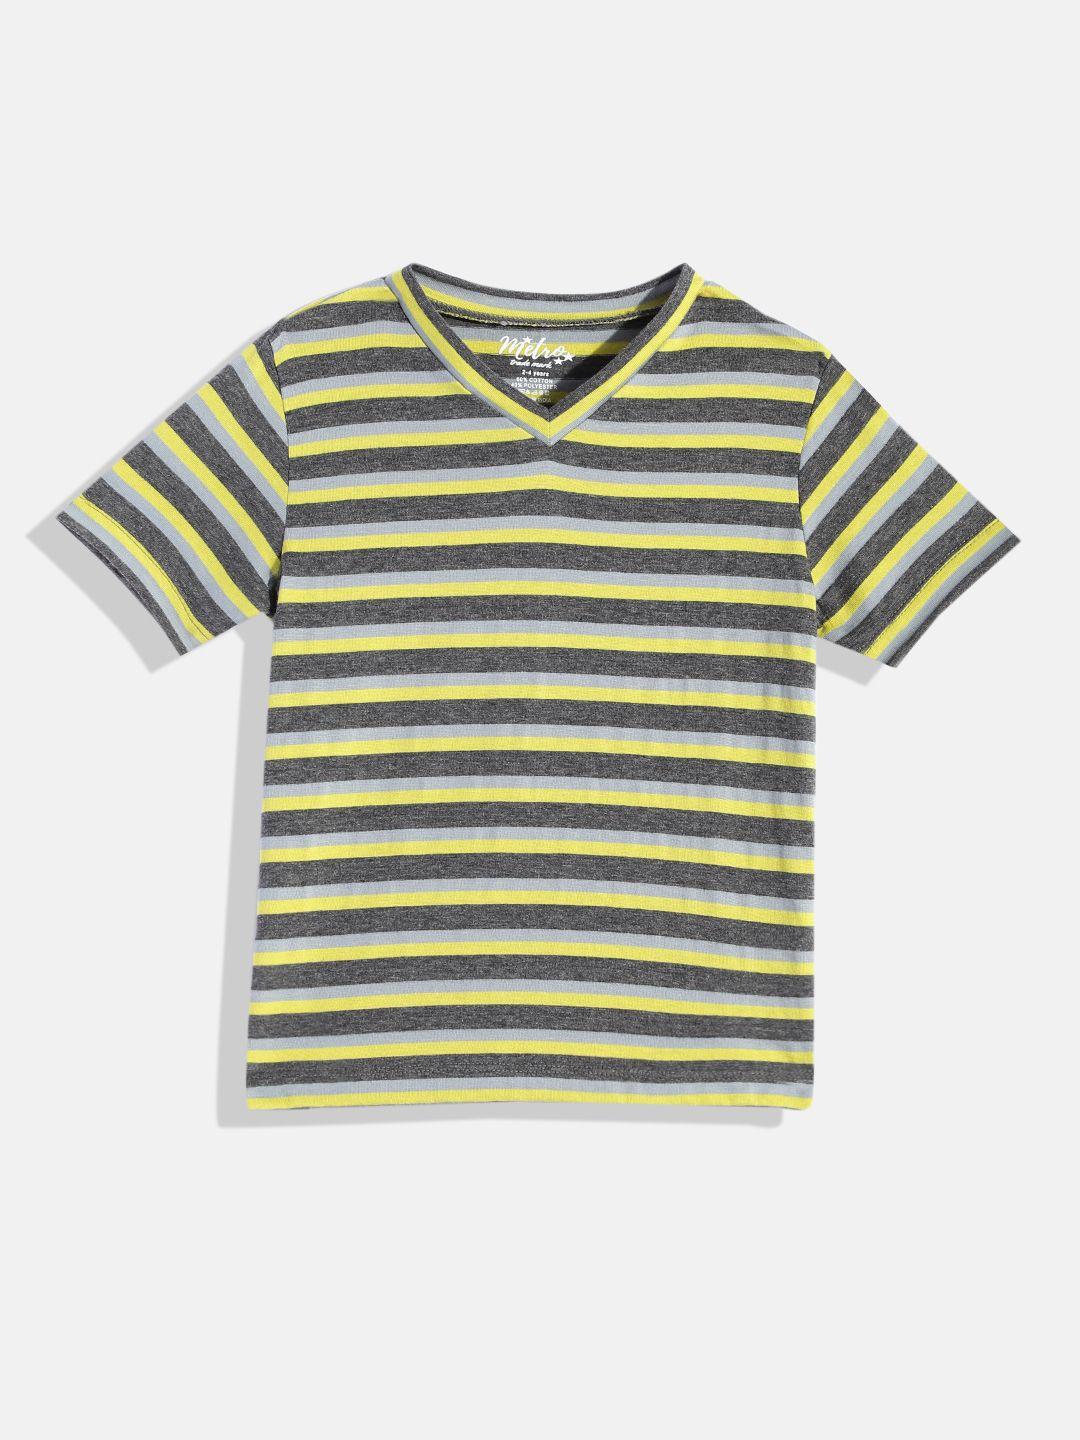 metro kids company boys grey & yellow striped v-neck t-shirt